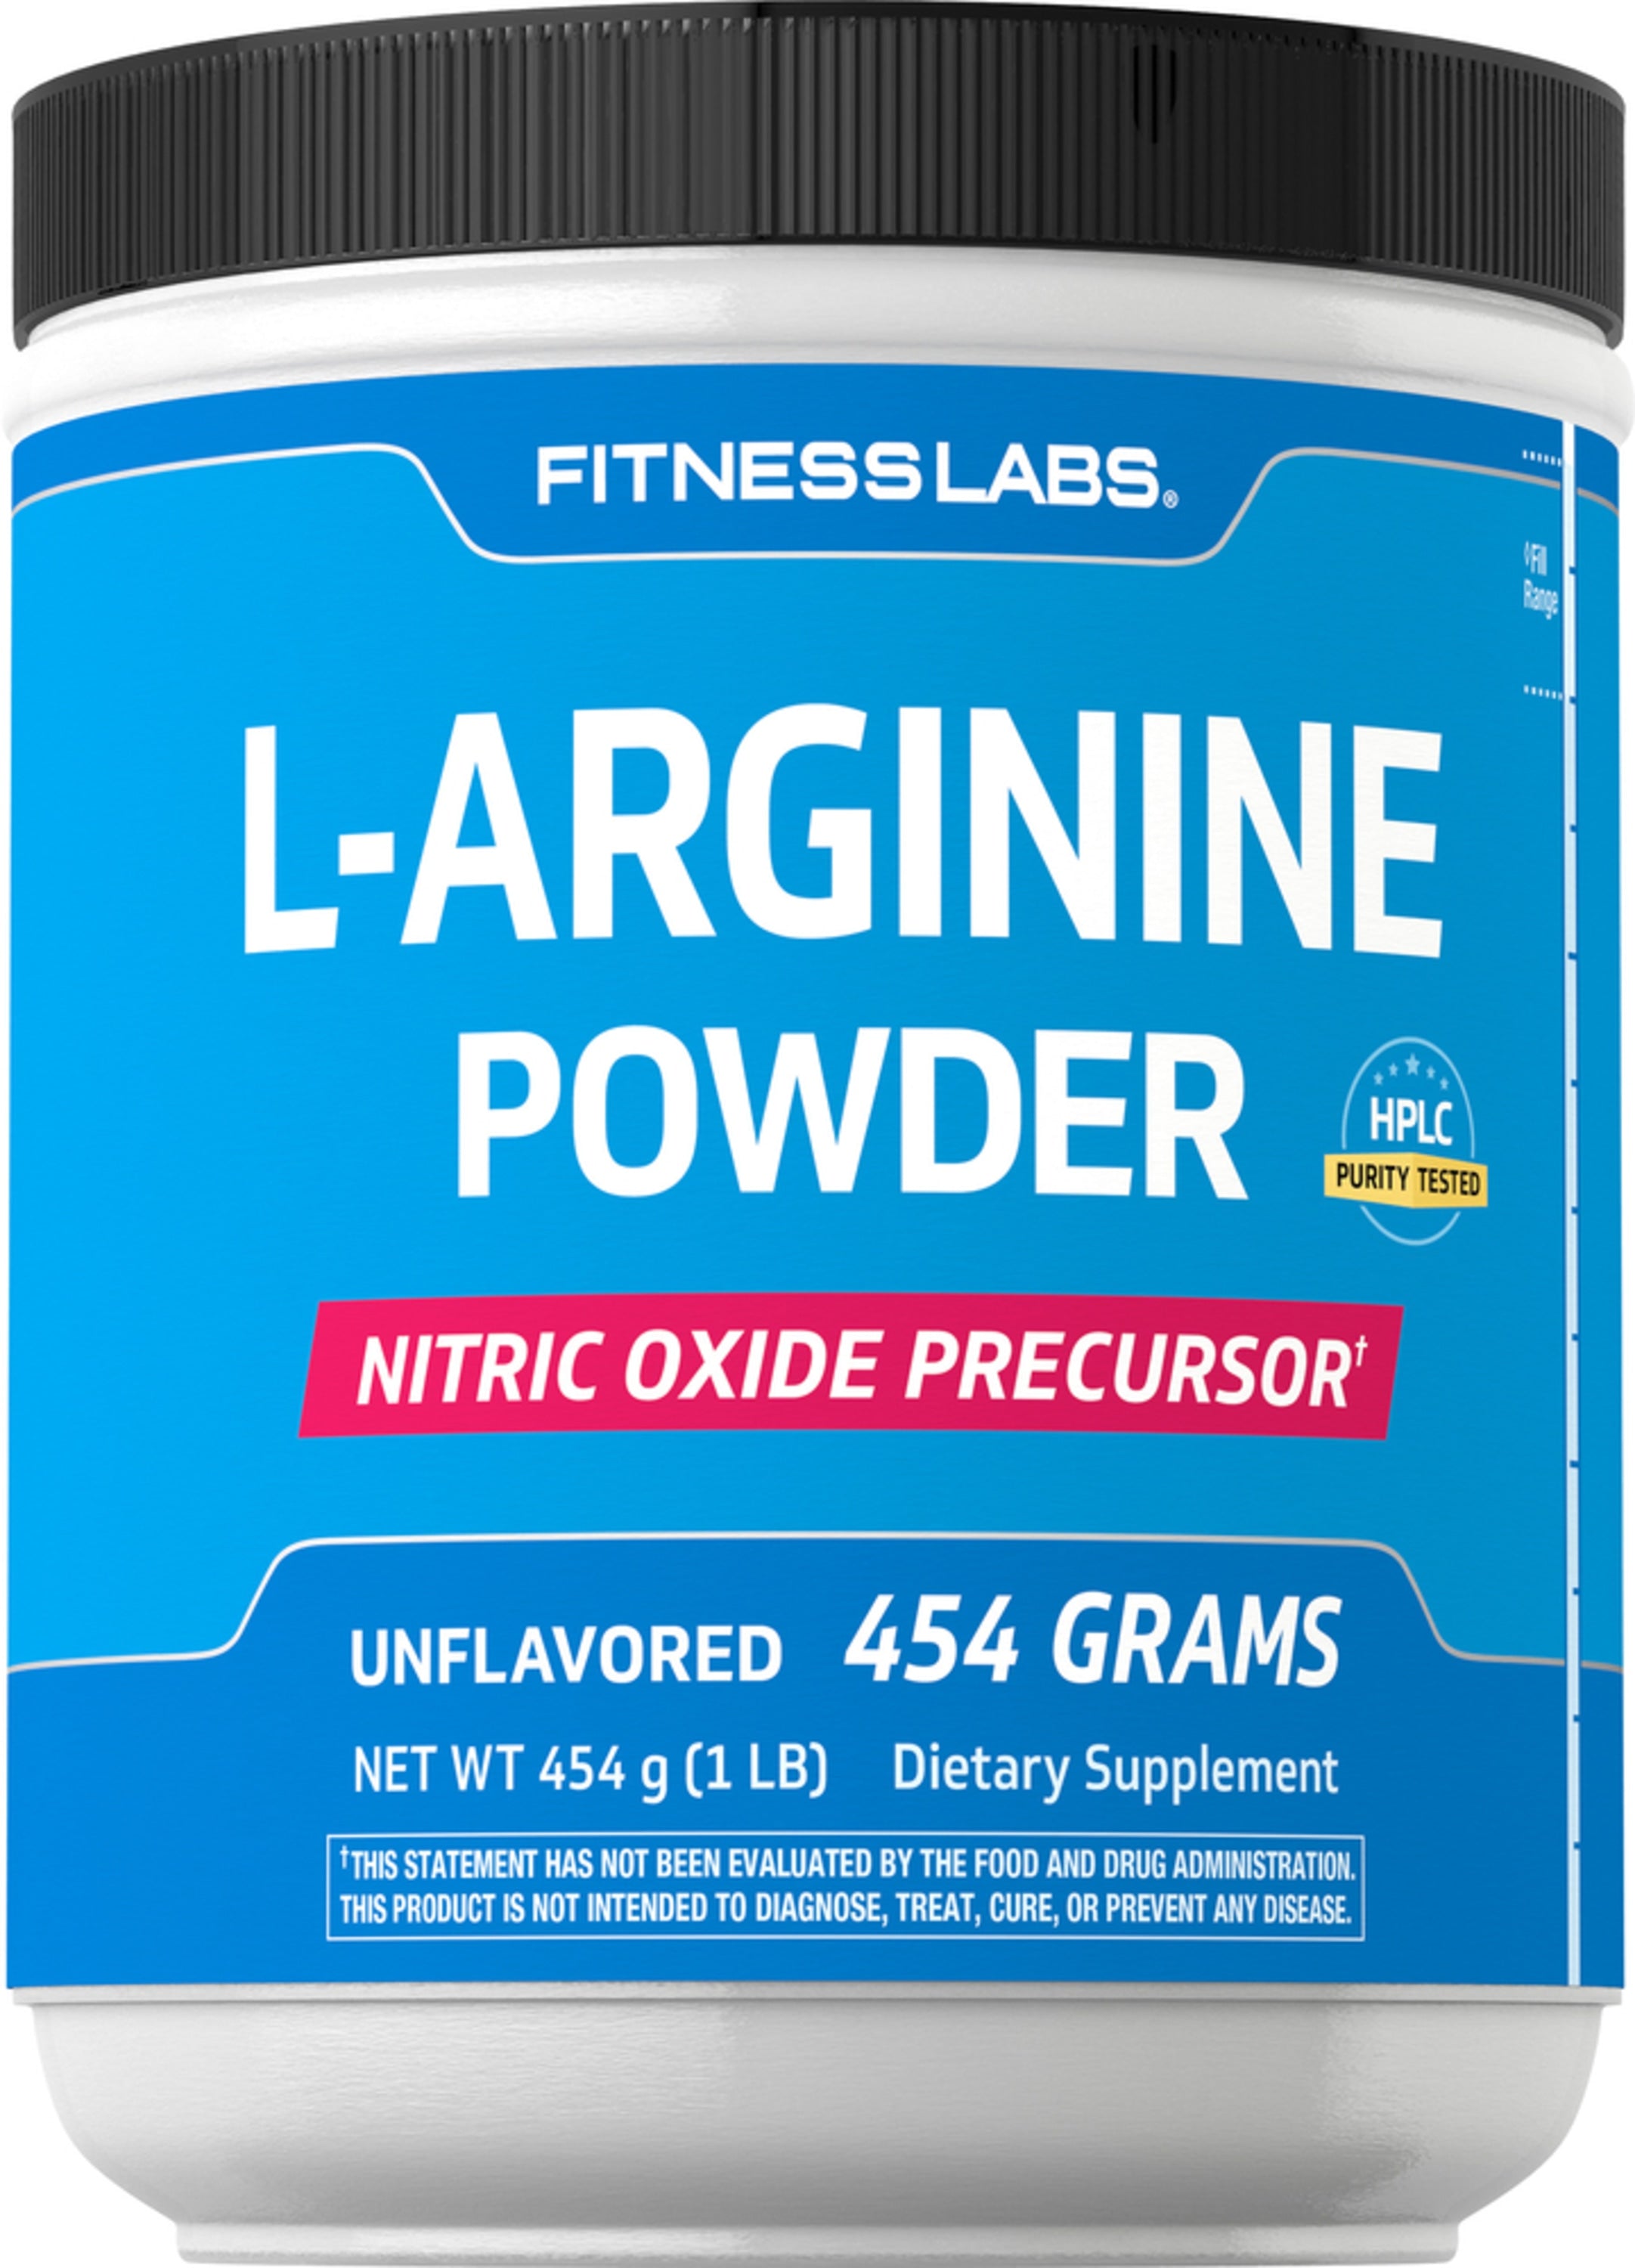 L-Arginine Powder, 3000 mg (per serving), 1 lb (454 g) Bottle